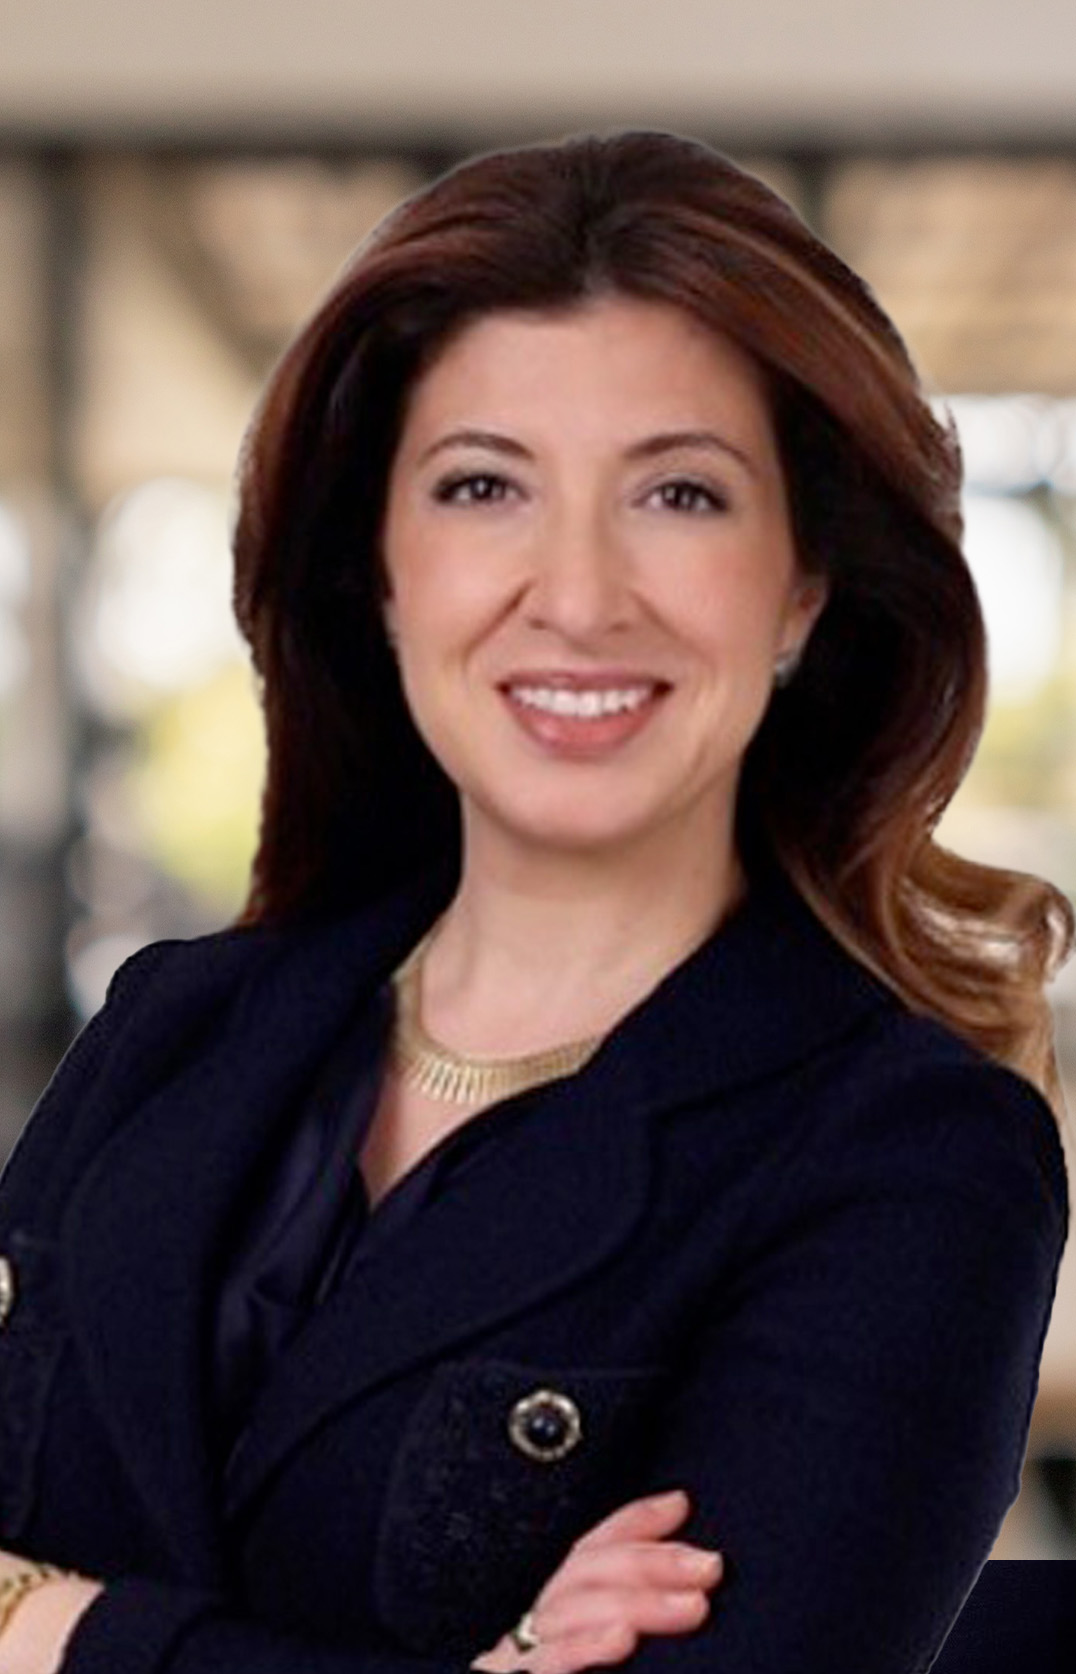 New Jersey family law attorney Angela M. Scafuri